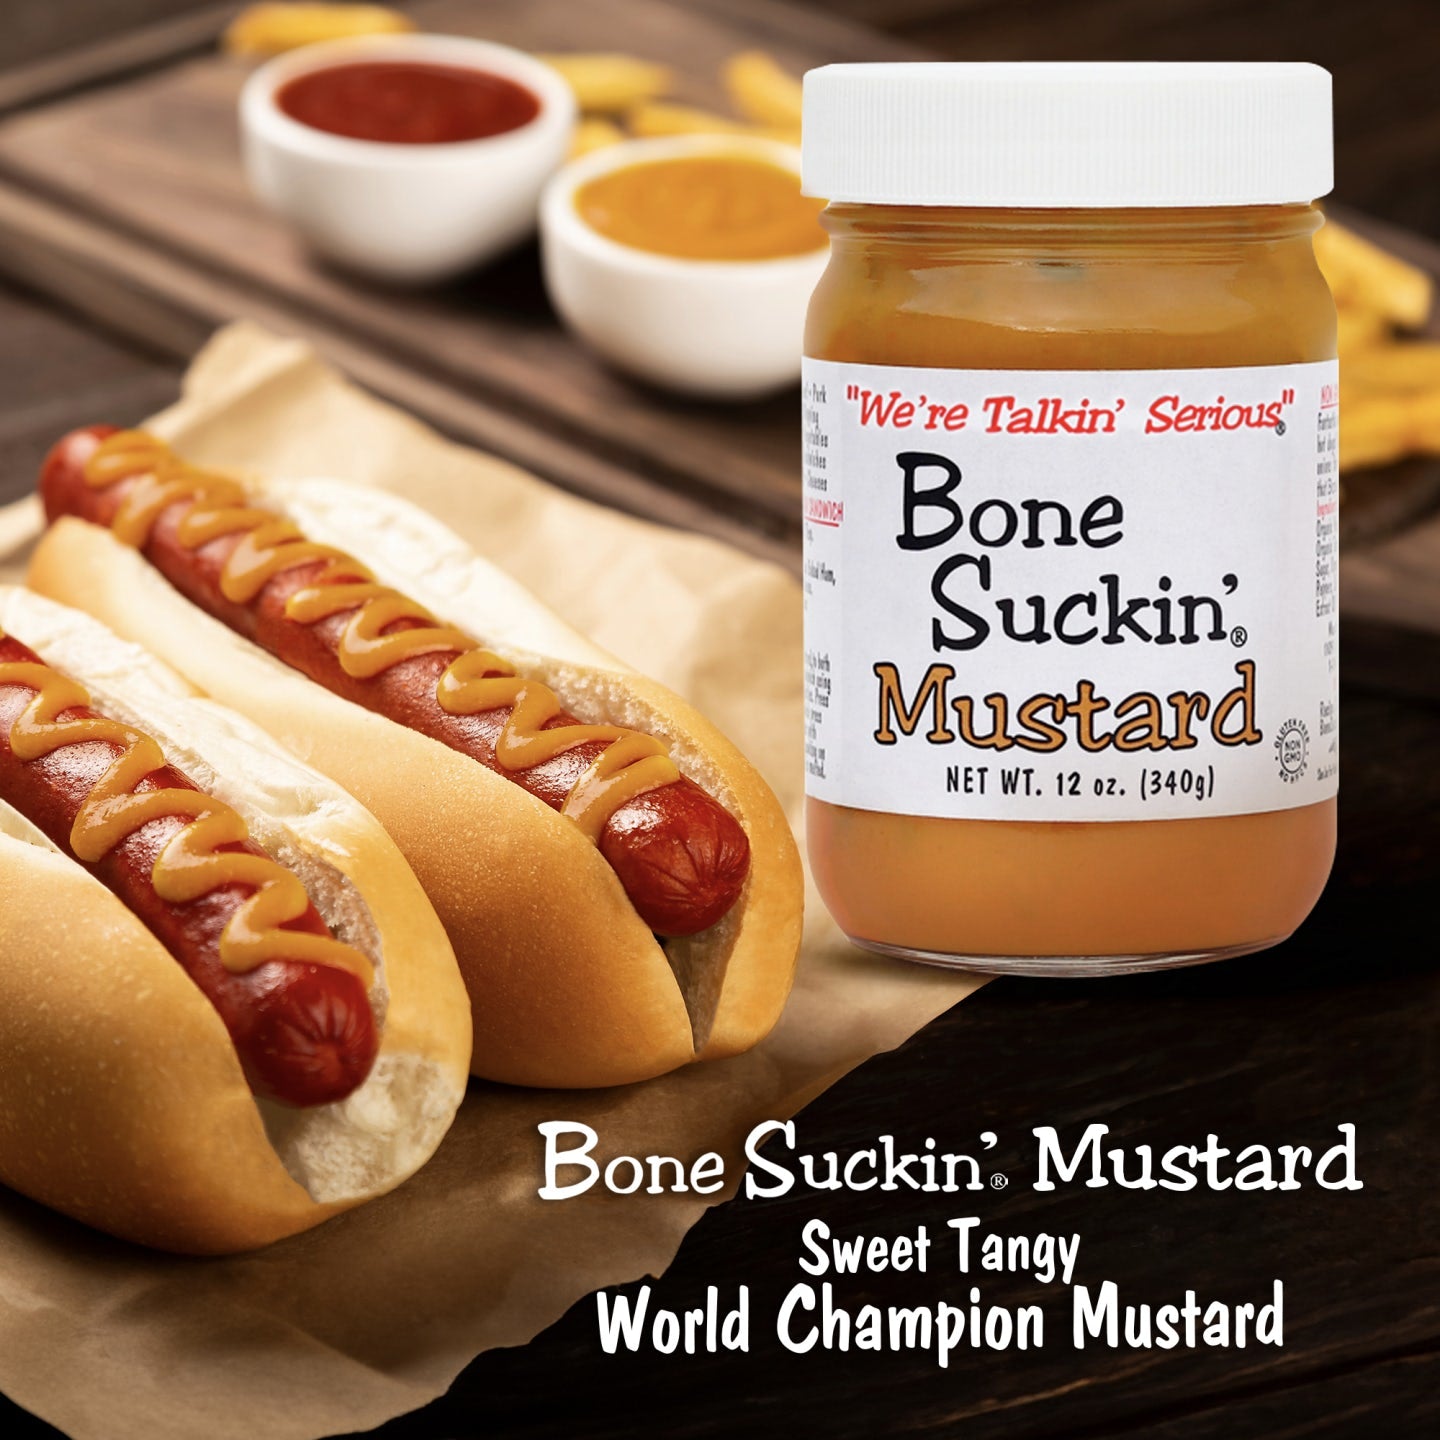 Bone Suckin' Mustard. Sweet Tangy World Champion Mustard.